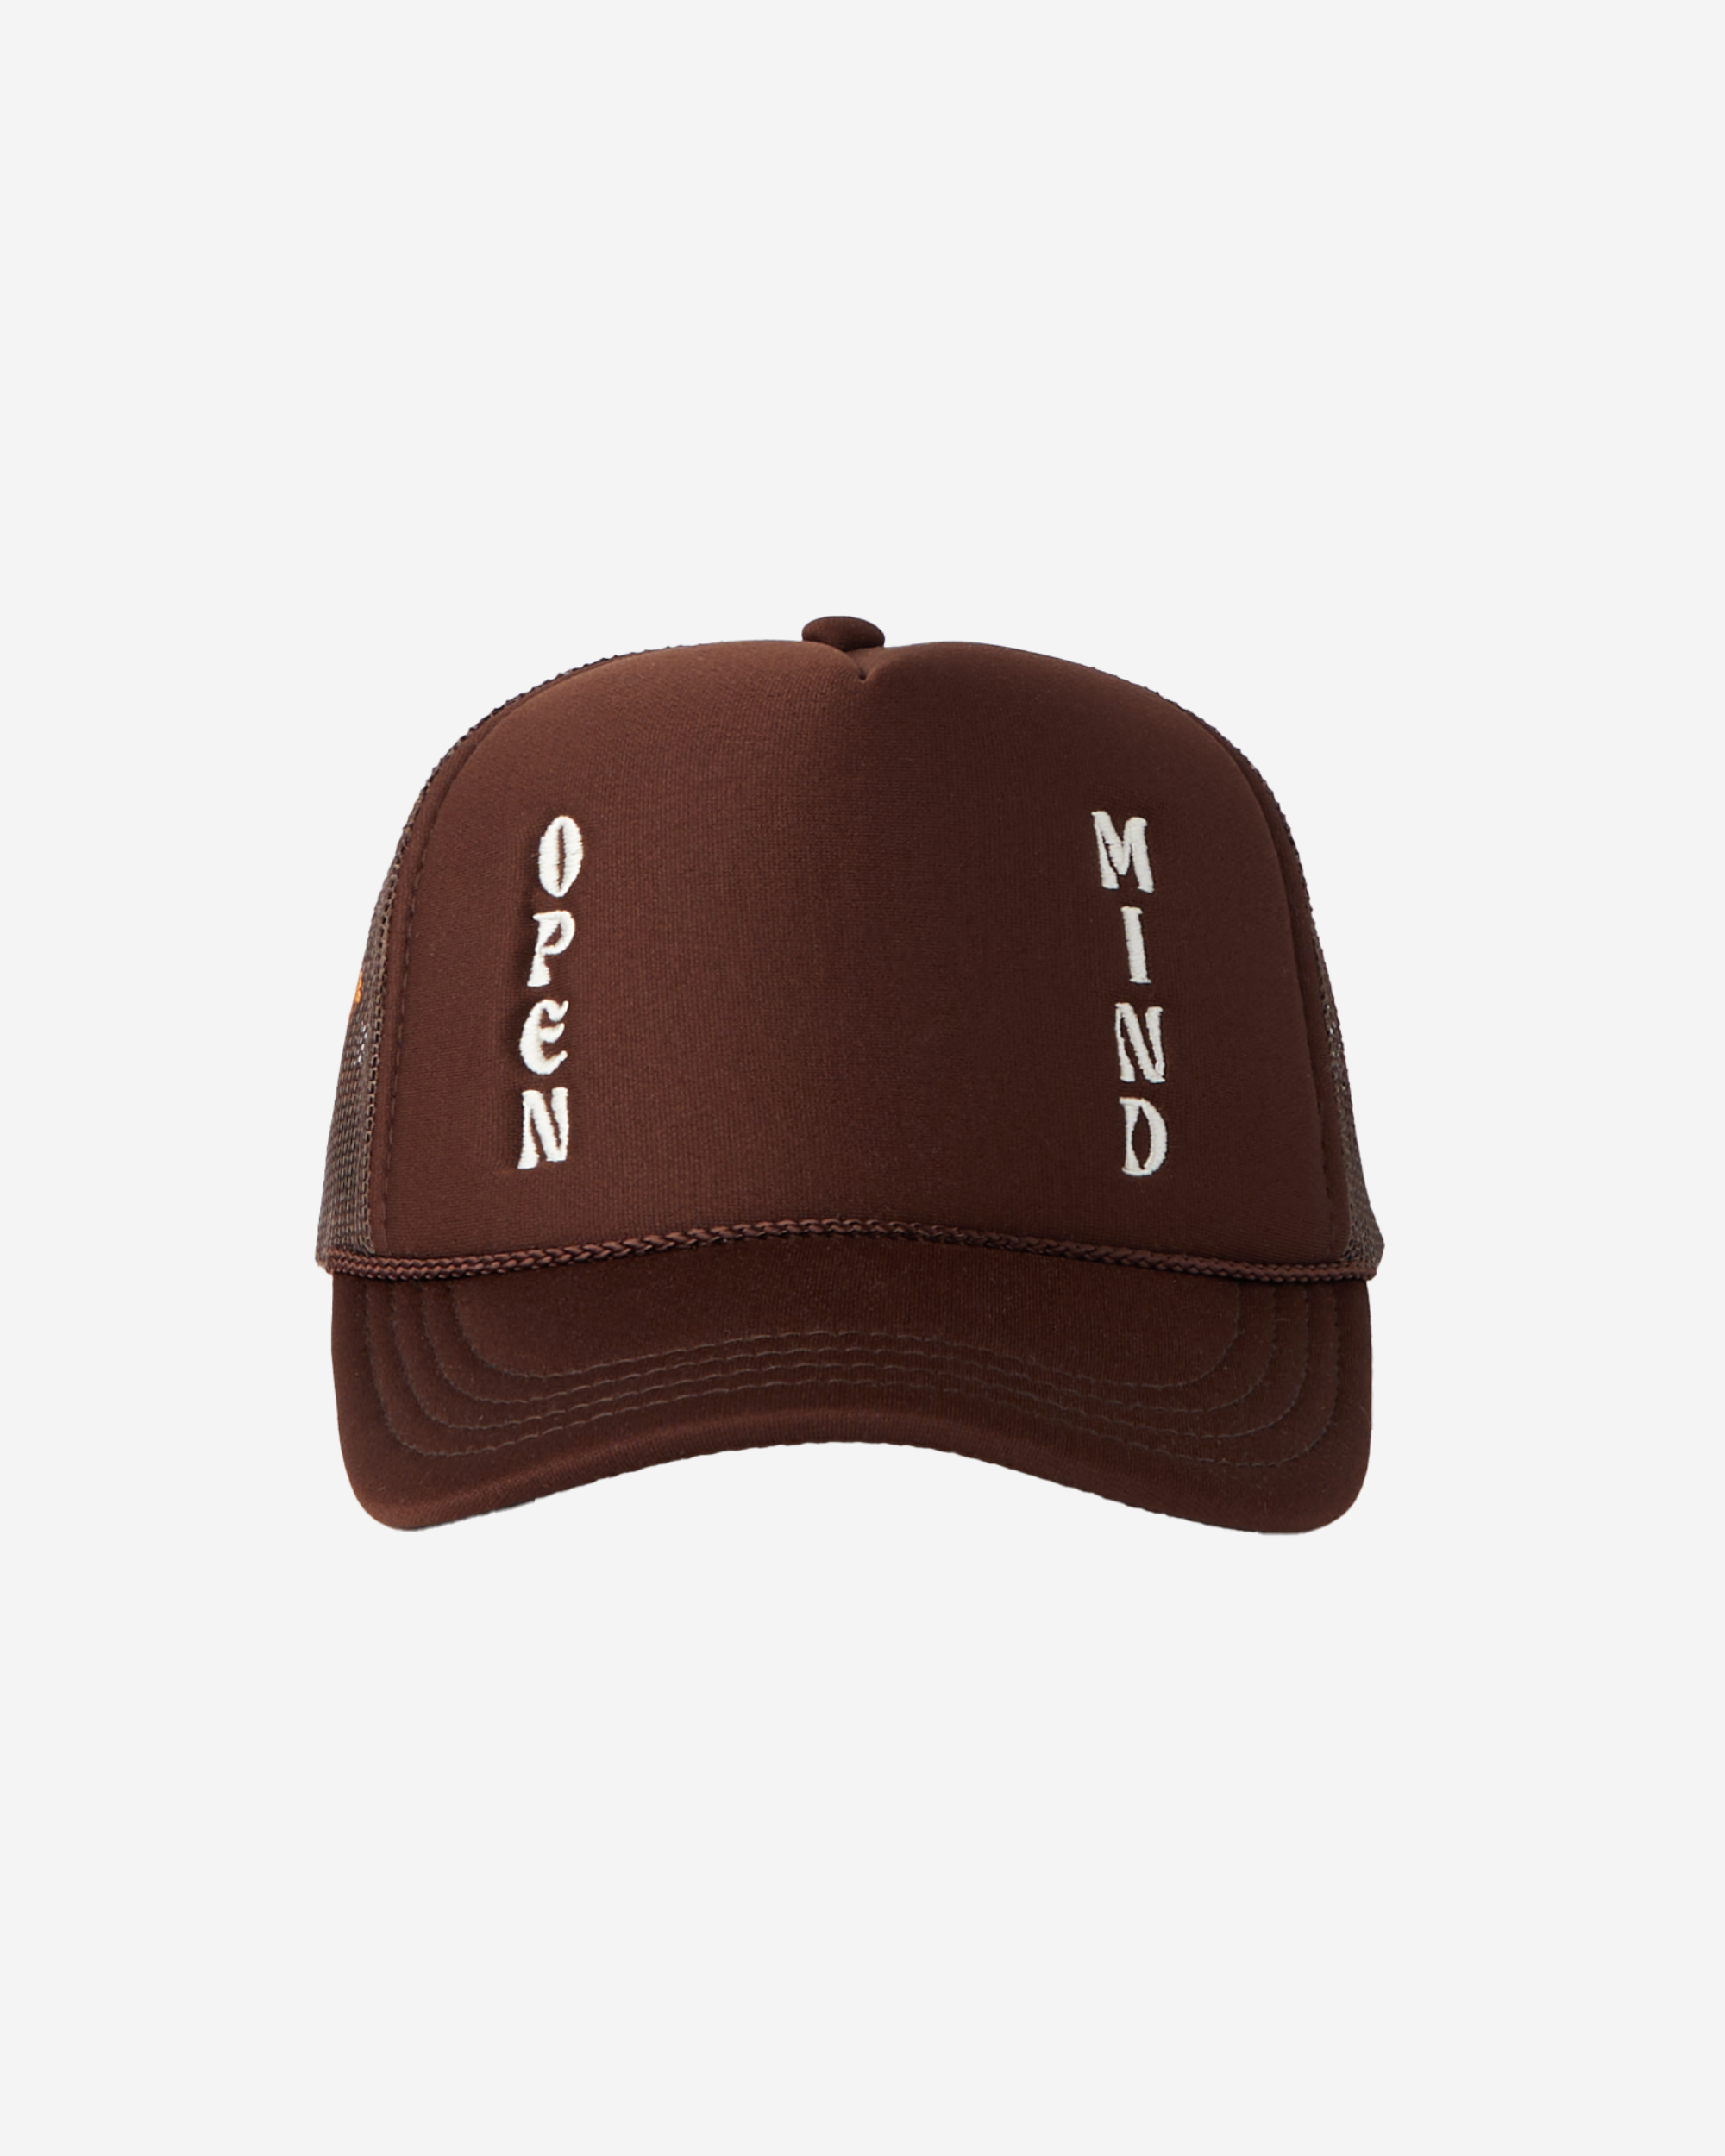 Open Mind Trucker Hat